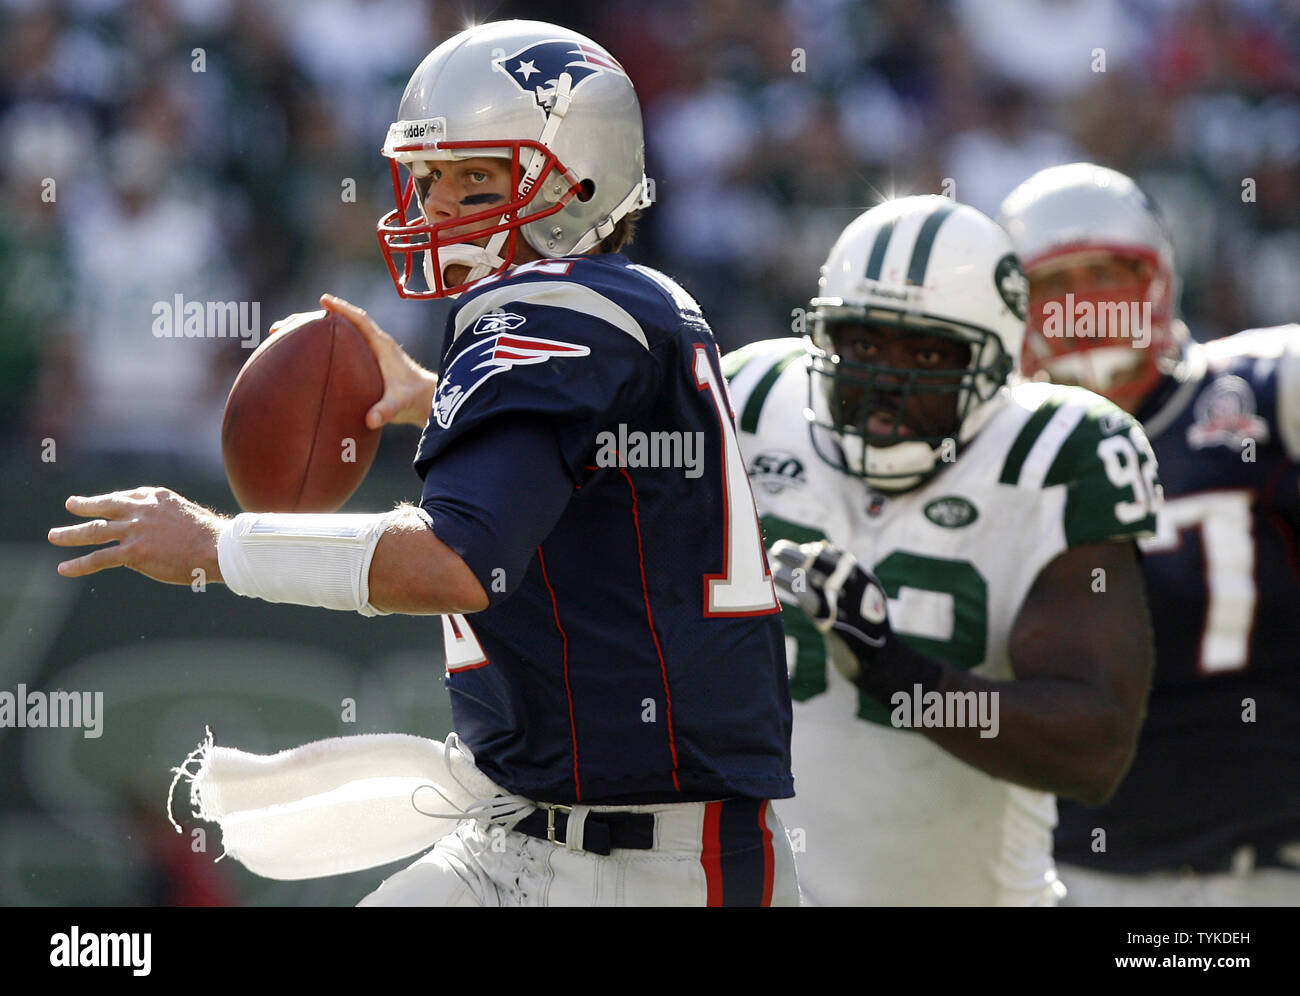 New England Patriots quarterback Tom Brady is pressured by New